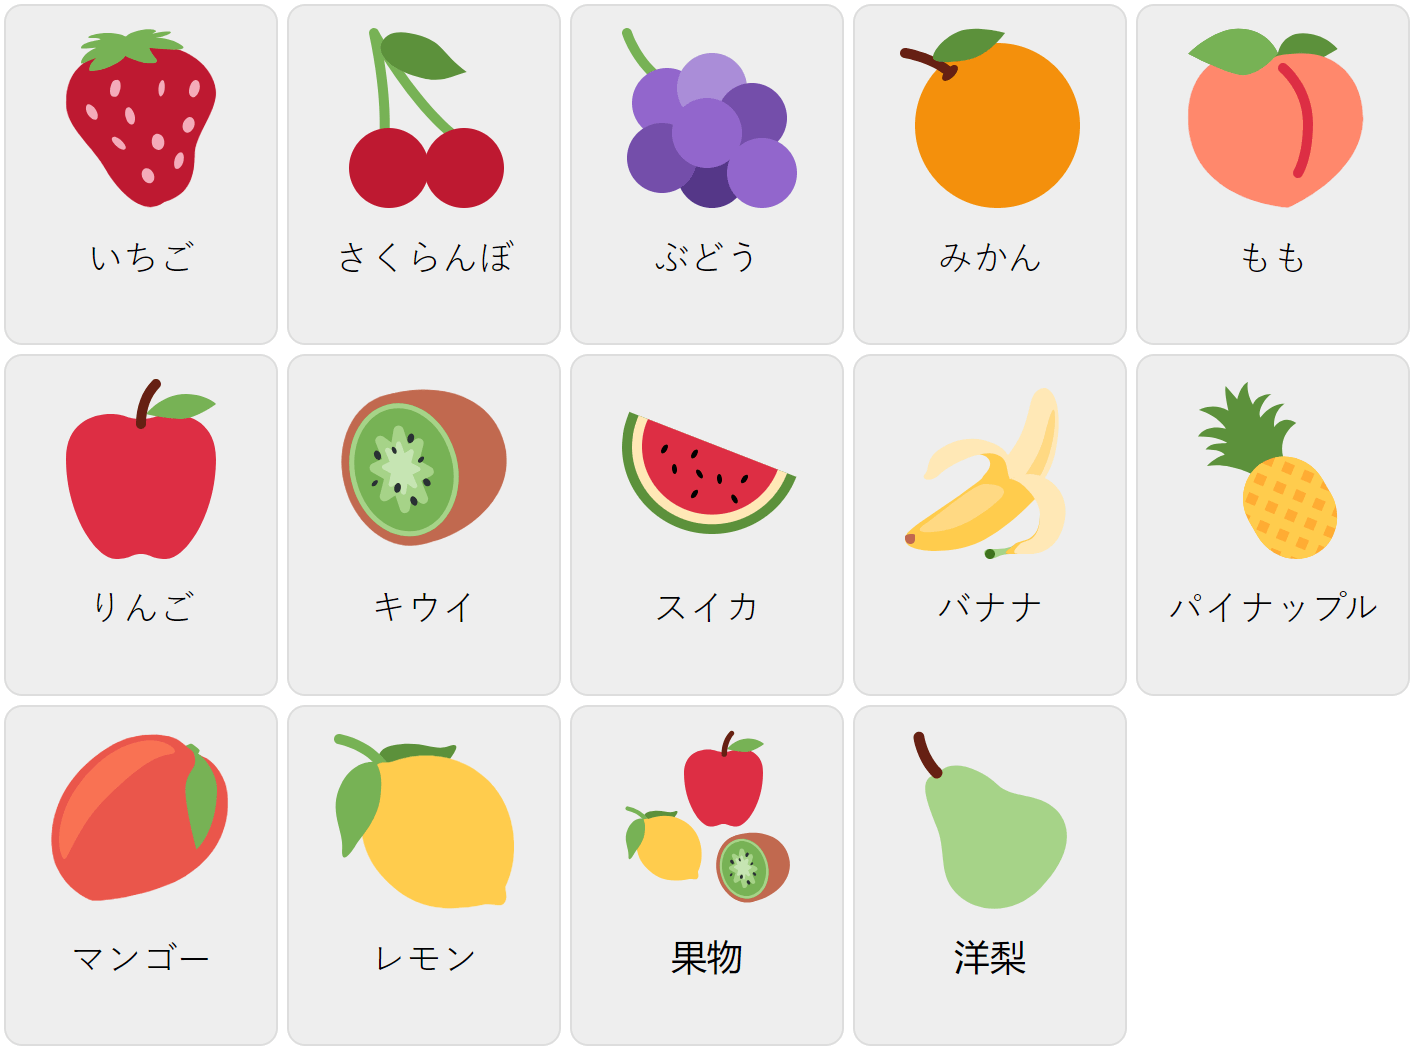 Frukter på japanska